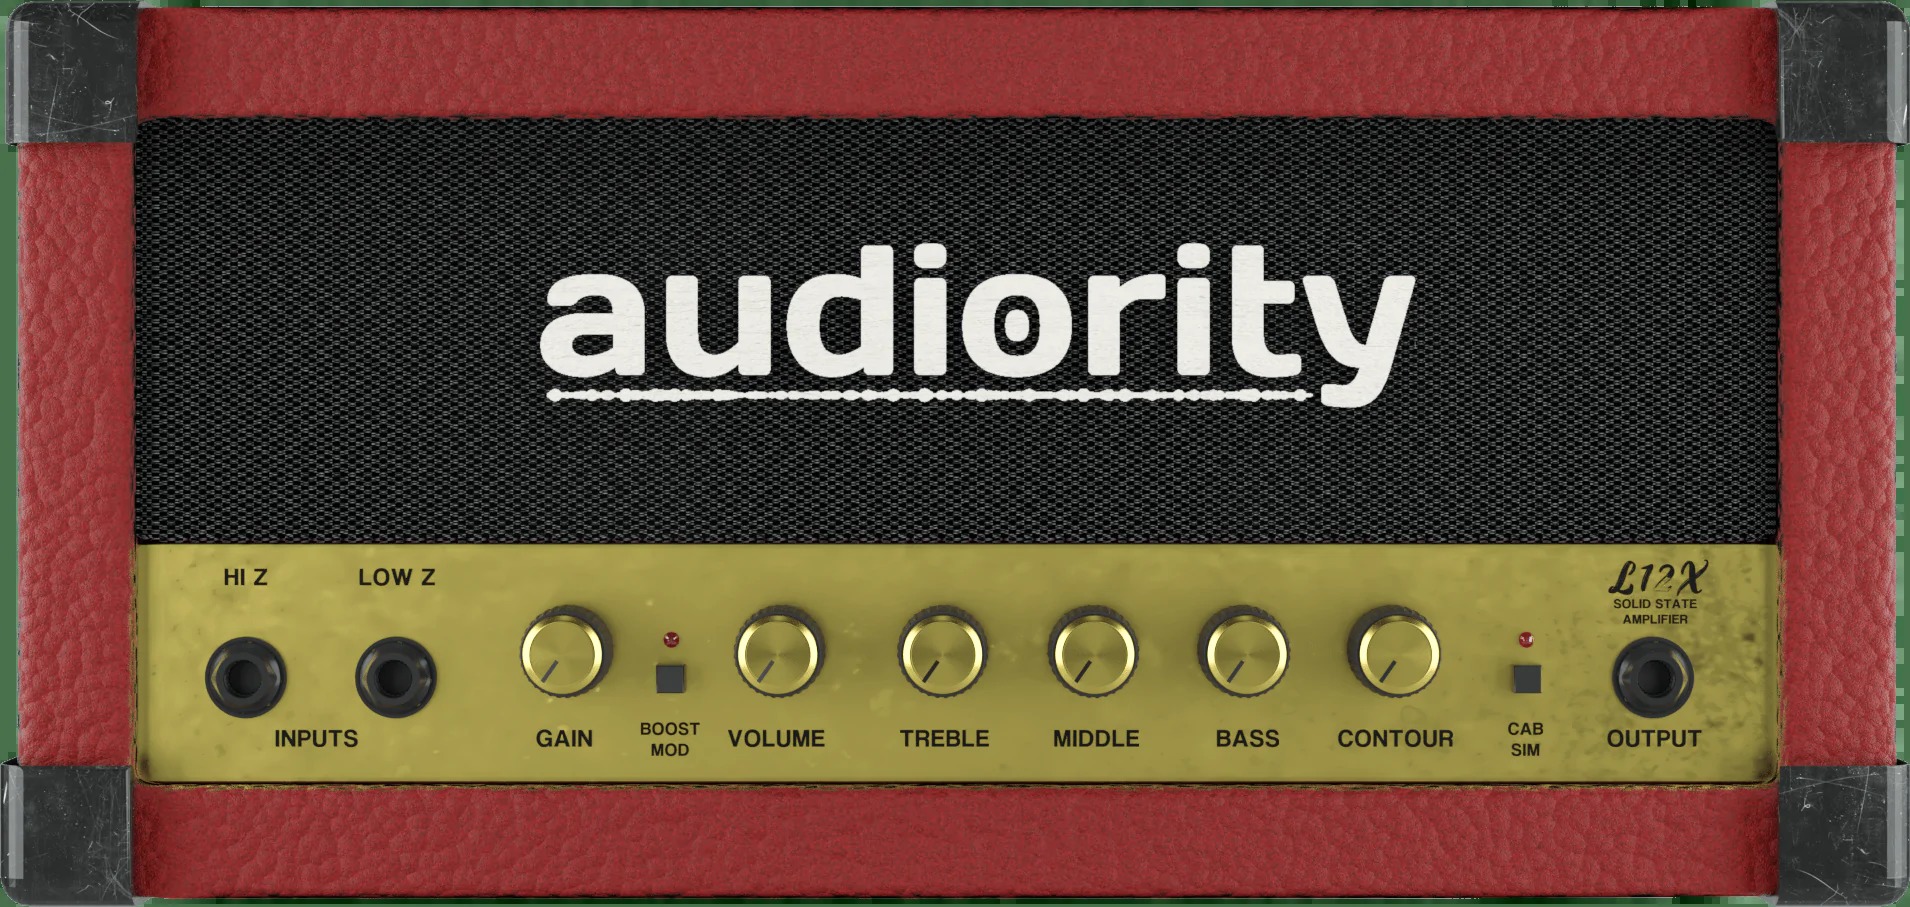 Audiority L12X